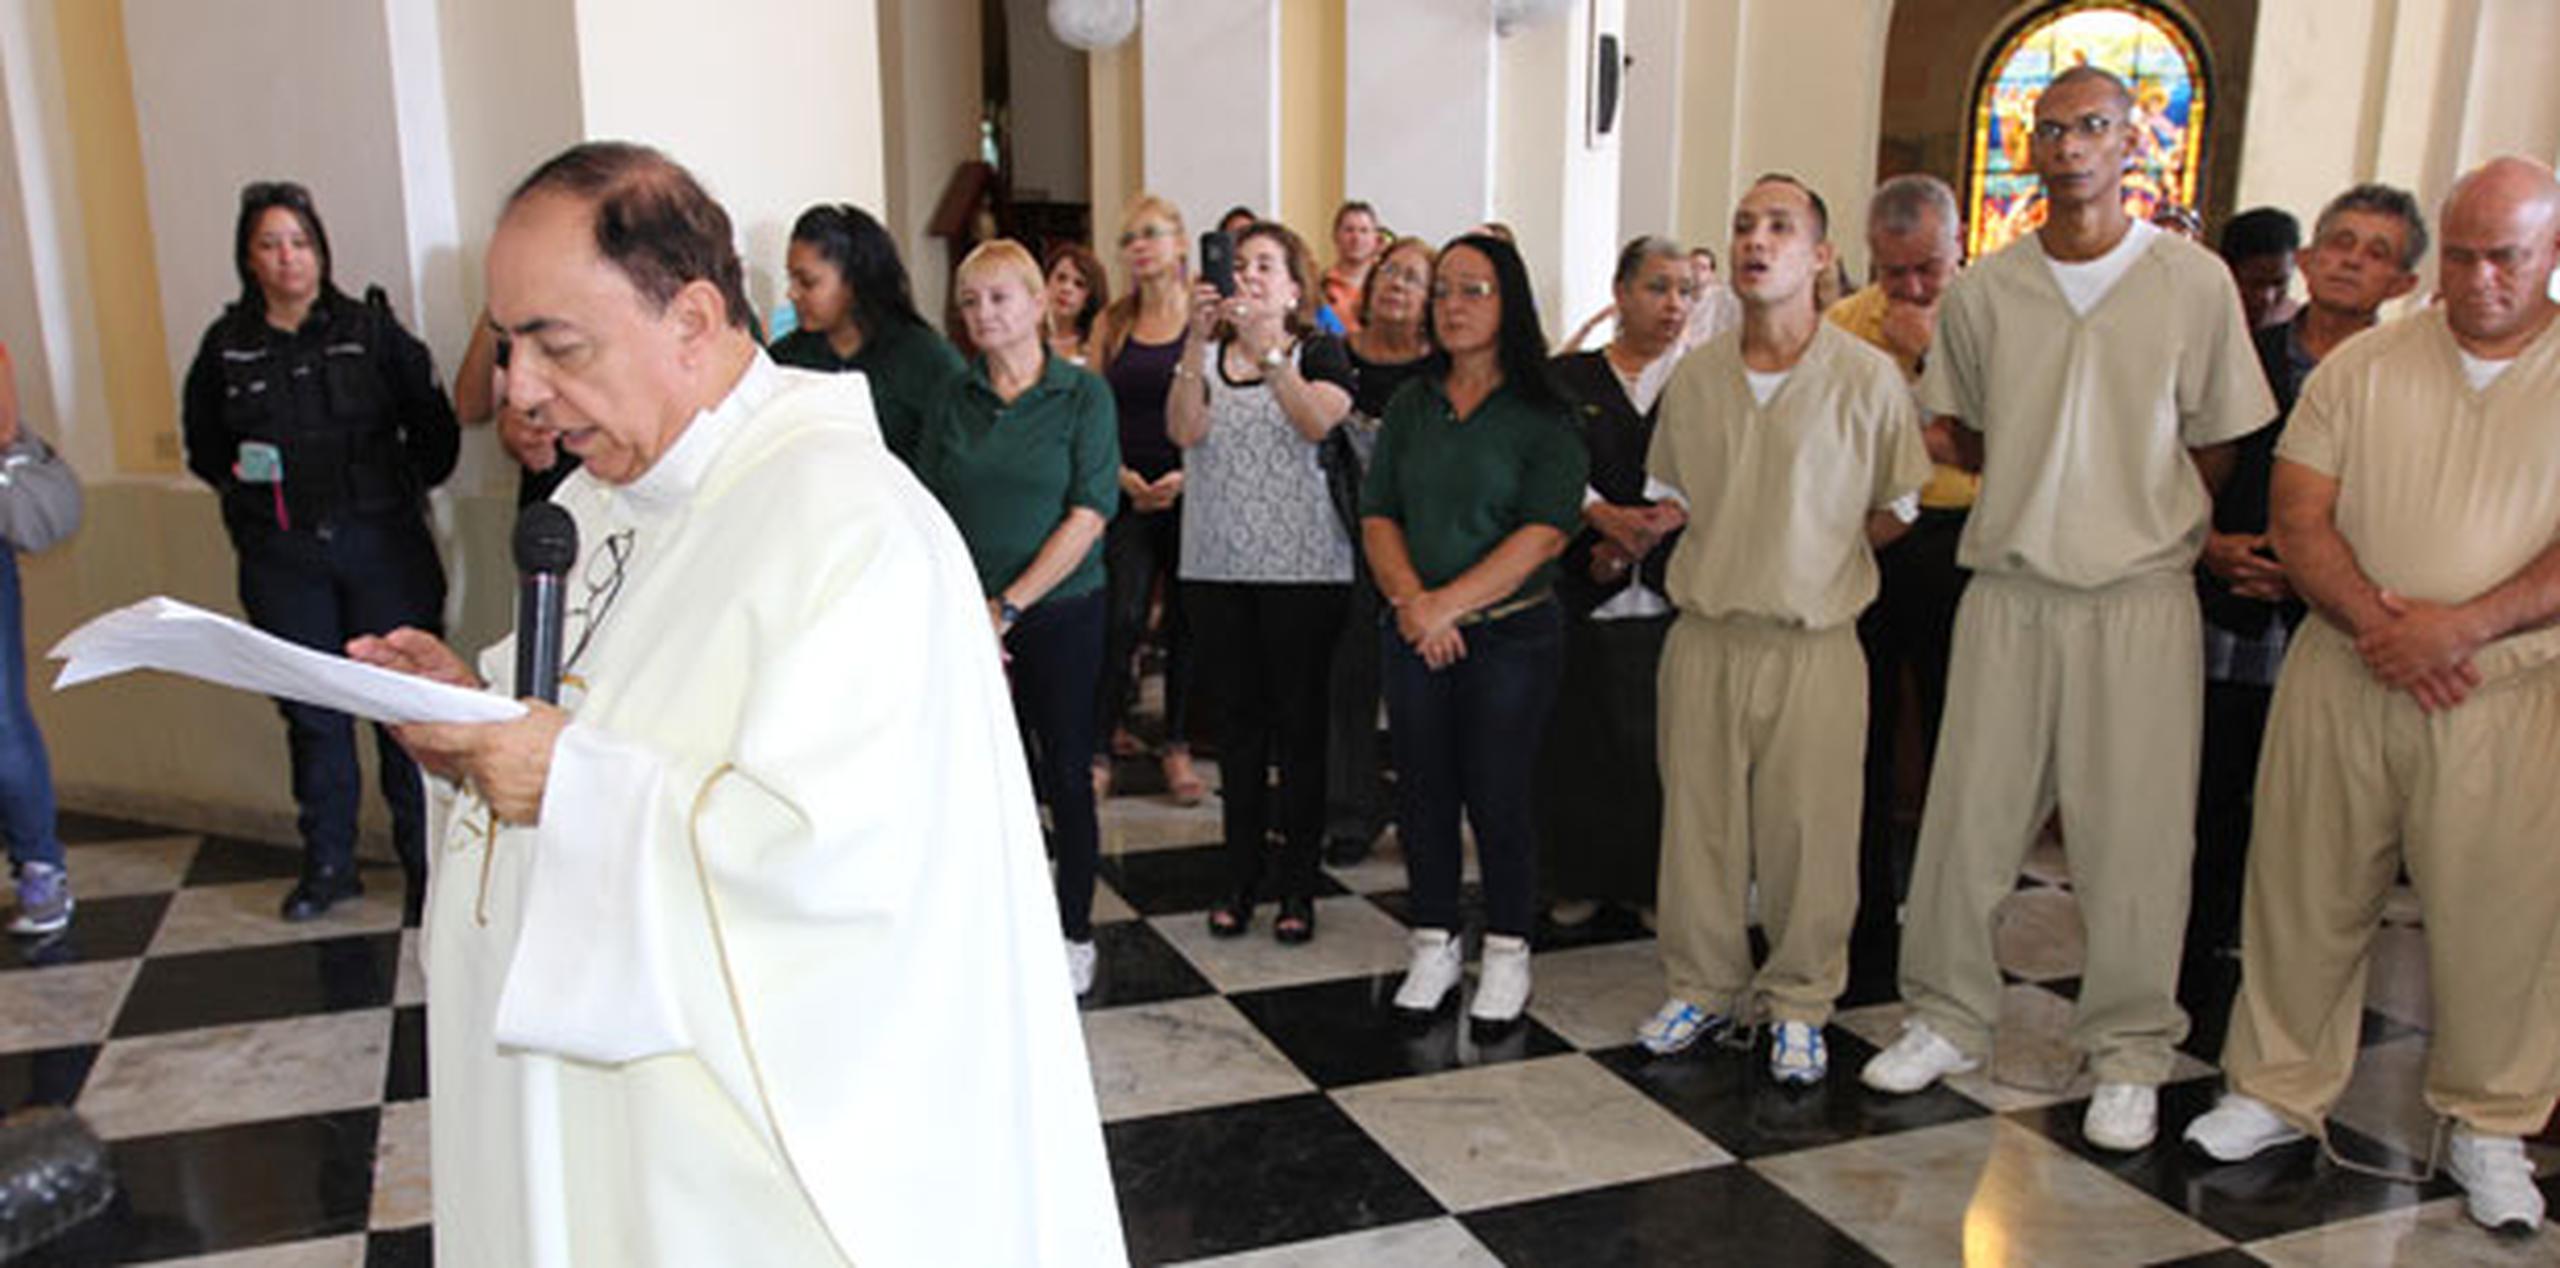 La misa fue realizada por el monseñor José Emilio Cummings. (alex.figueroa@gfrmedia.com)